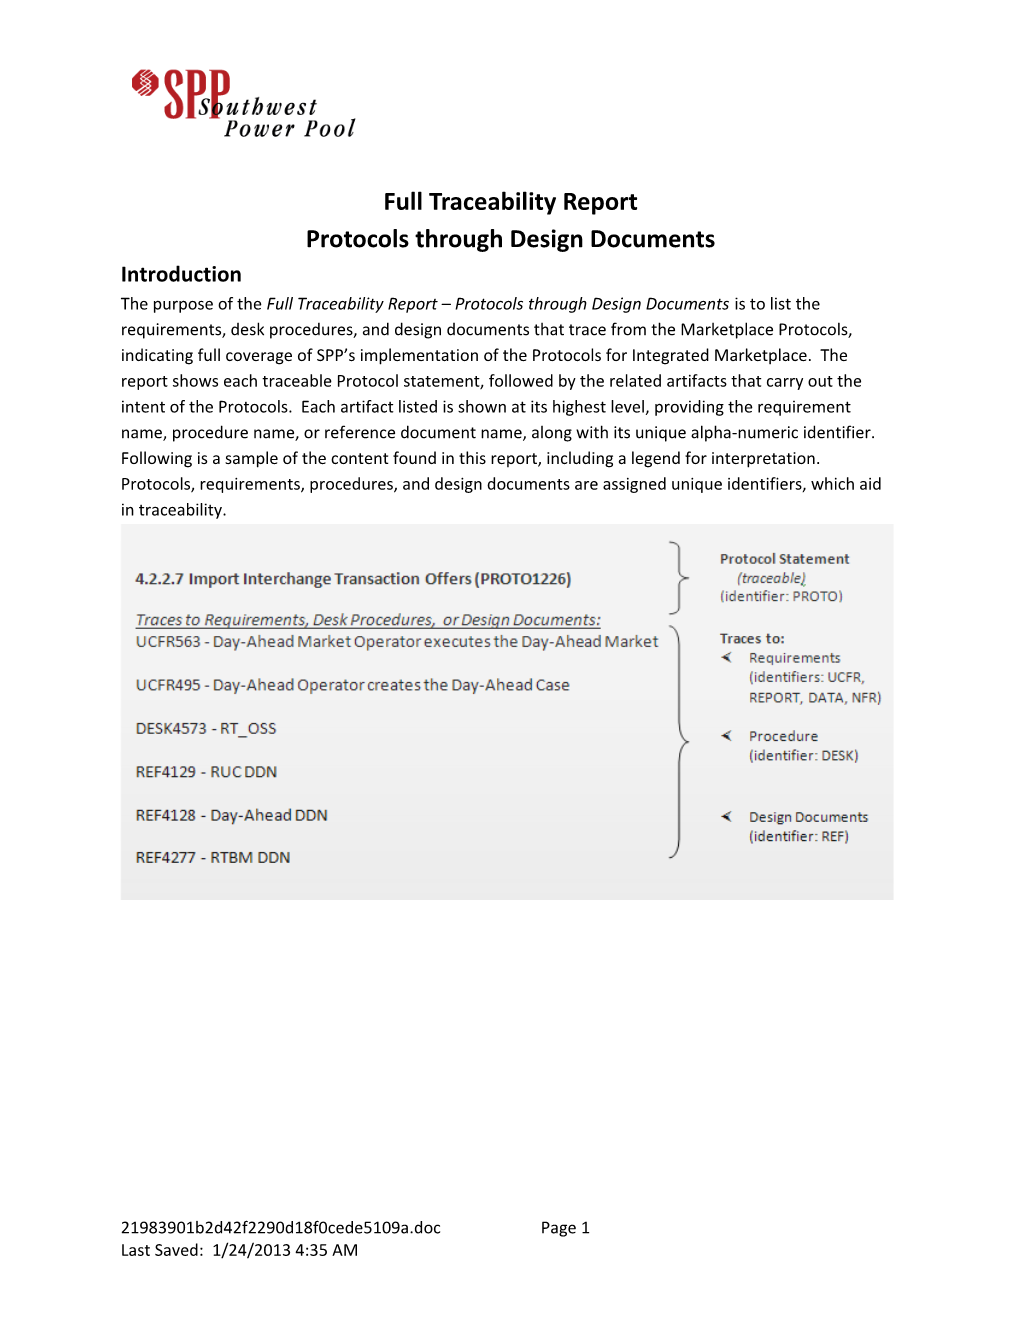 Full Traceability Report Protocols Through Design Documents